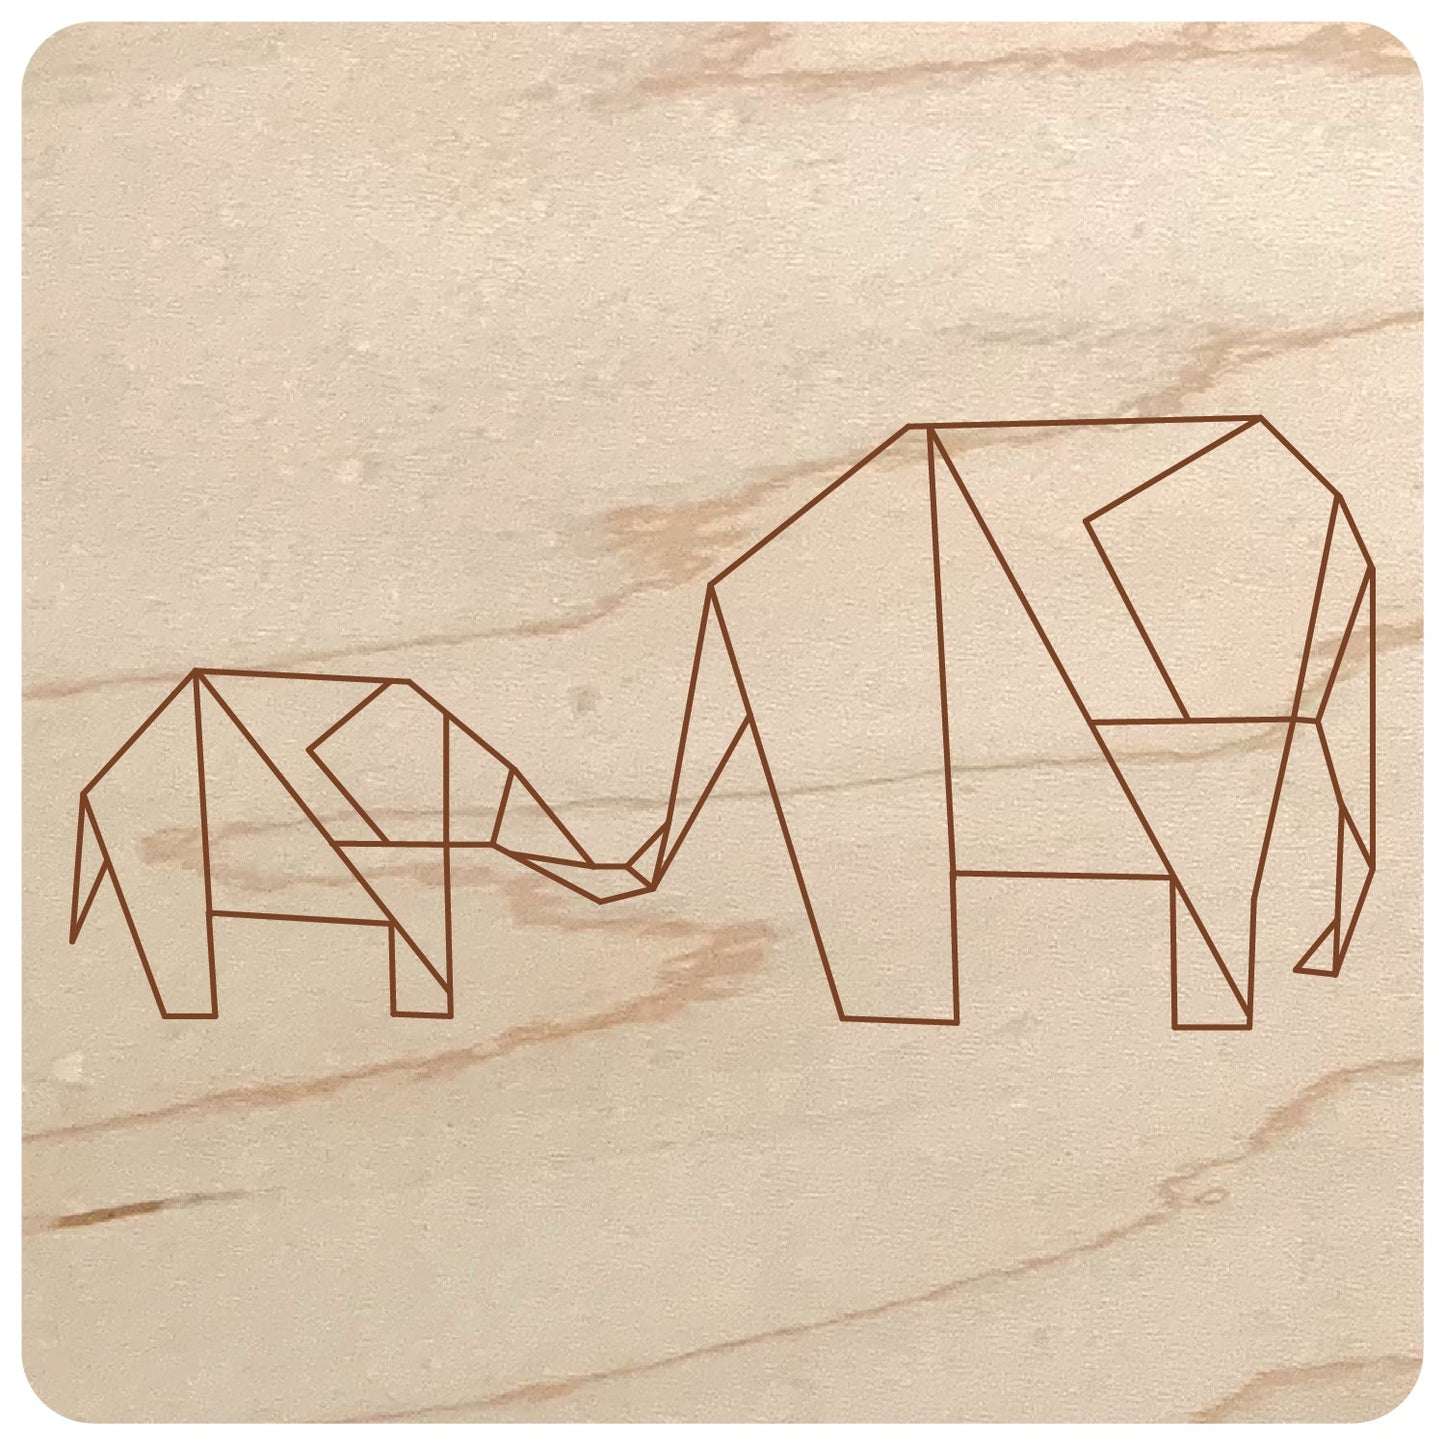 Laser Cut Wood Geometric Design for Wall - geometric elephants design on maple wood - by LeeMo Designs in Bend, Oregon